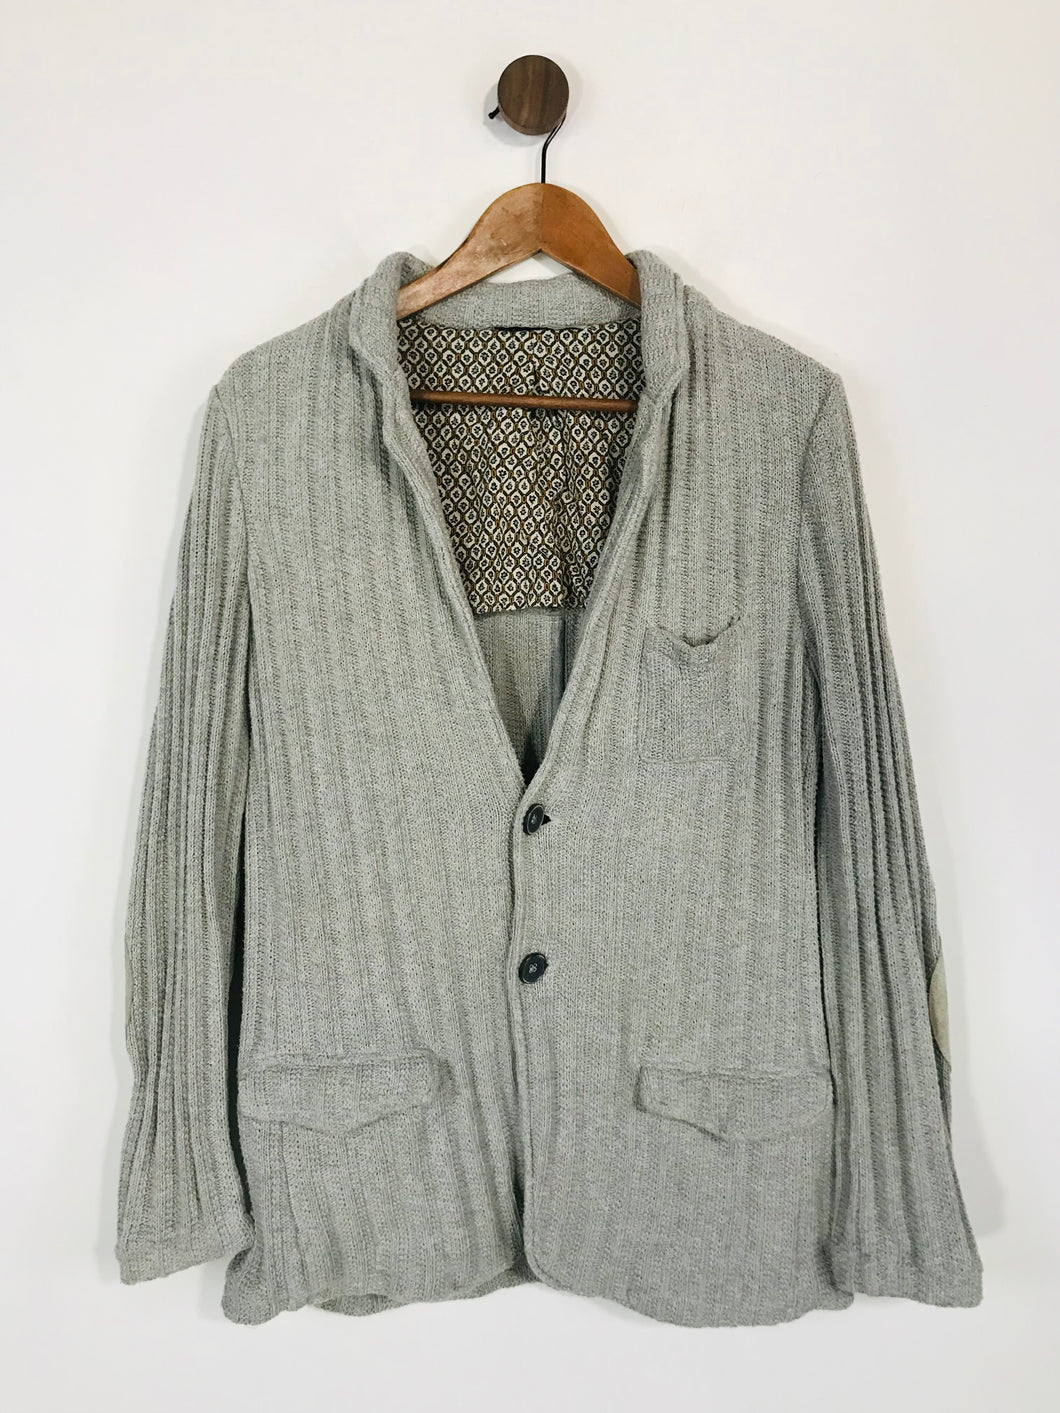 Zara Men's Striped Buttoned Cardigan | M | Grey